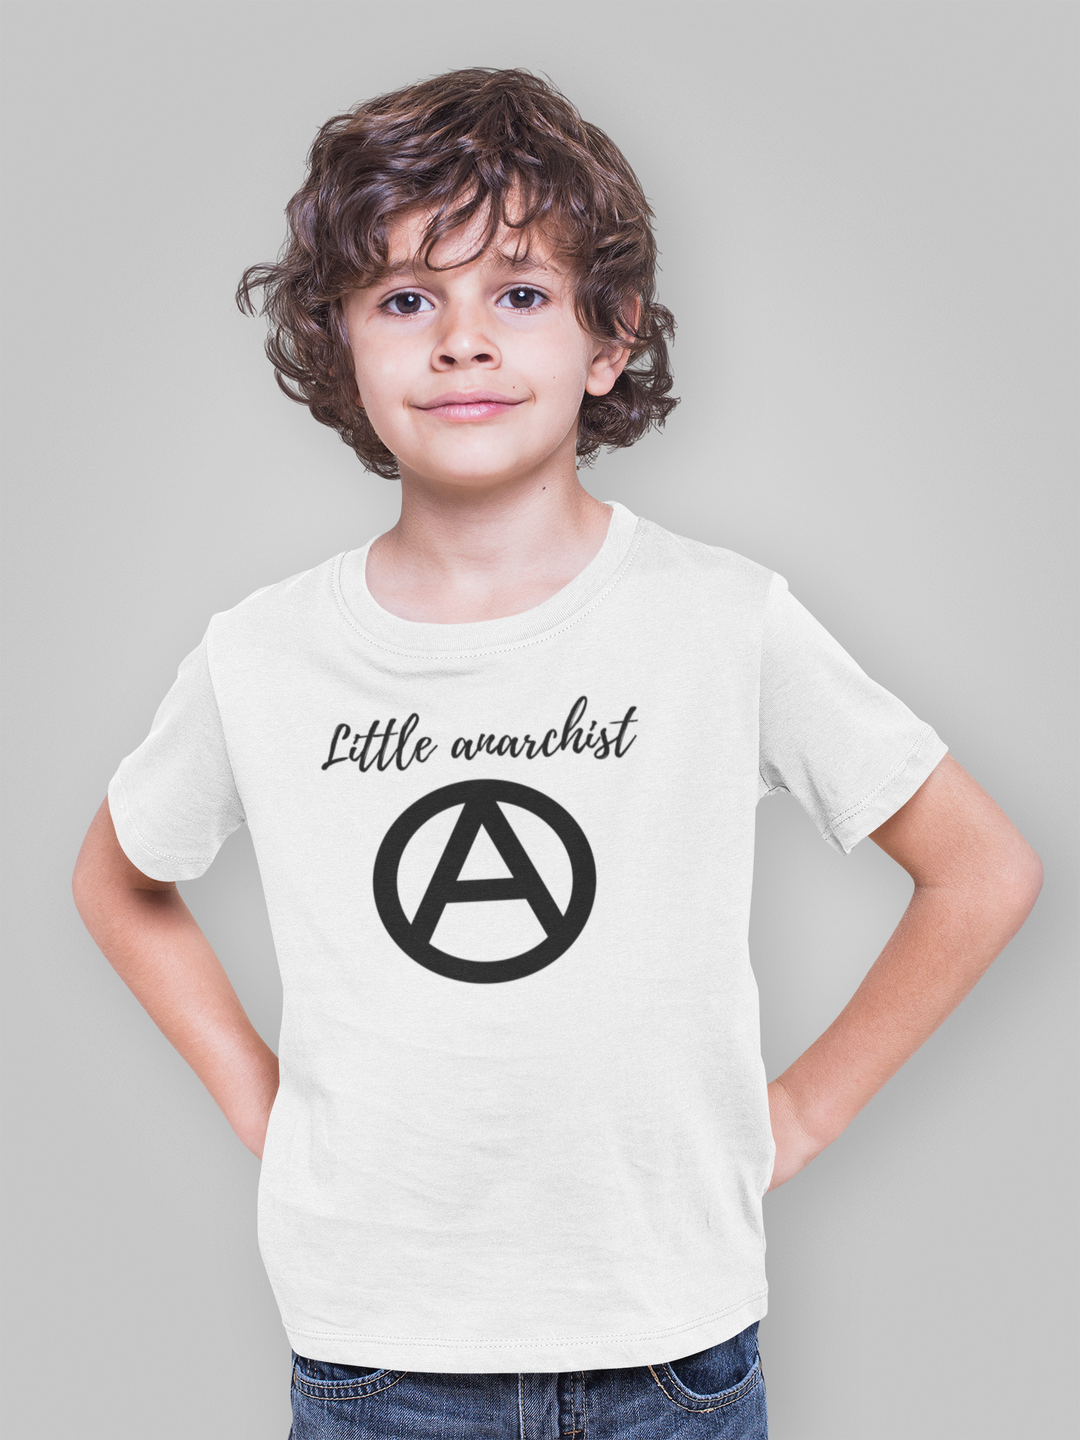 Little anarchist. Short sleeve t shirt for toddler and kids. - TeesForToddlersandKids -  t-shirt - seasons, summer - little-anarchist-short-sleeve-t-shirt-for-toddler-and-kids